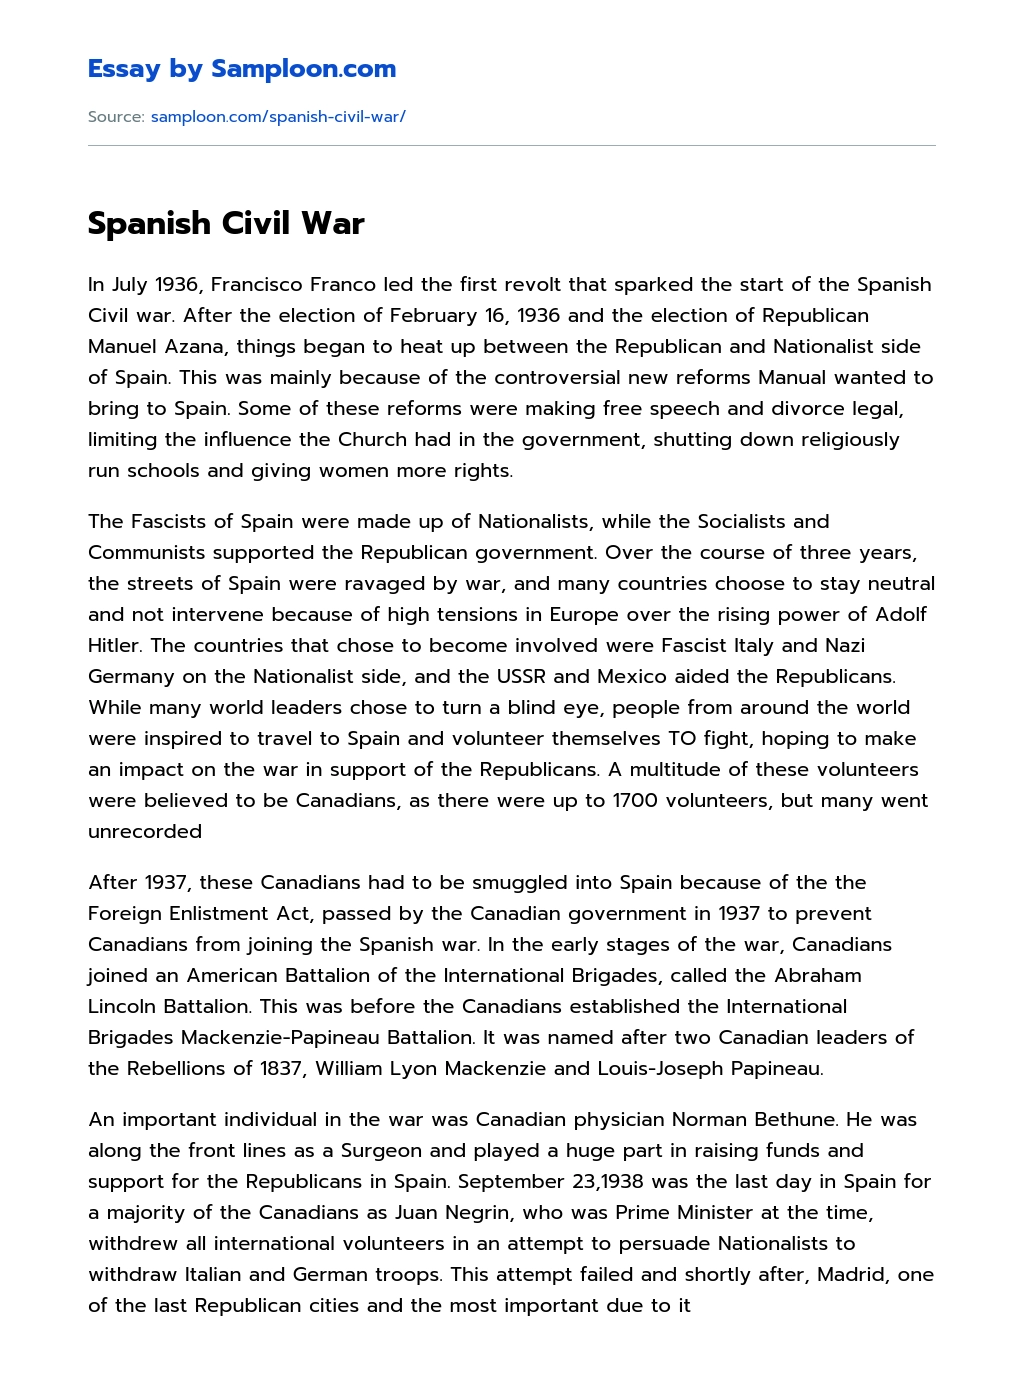 Spanish Civil War essay